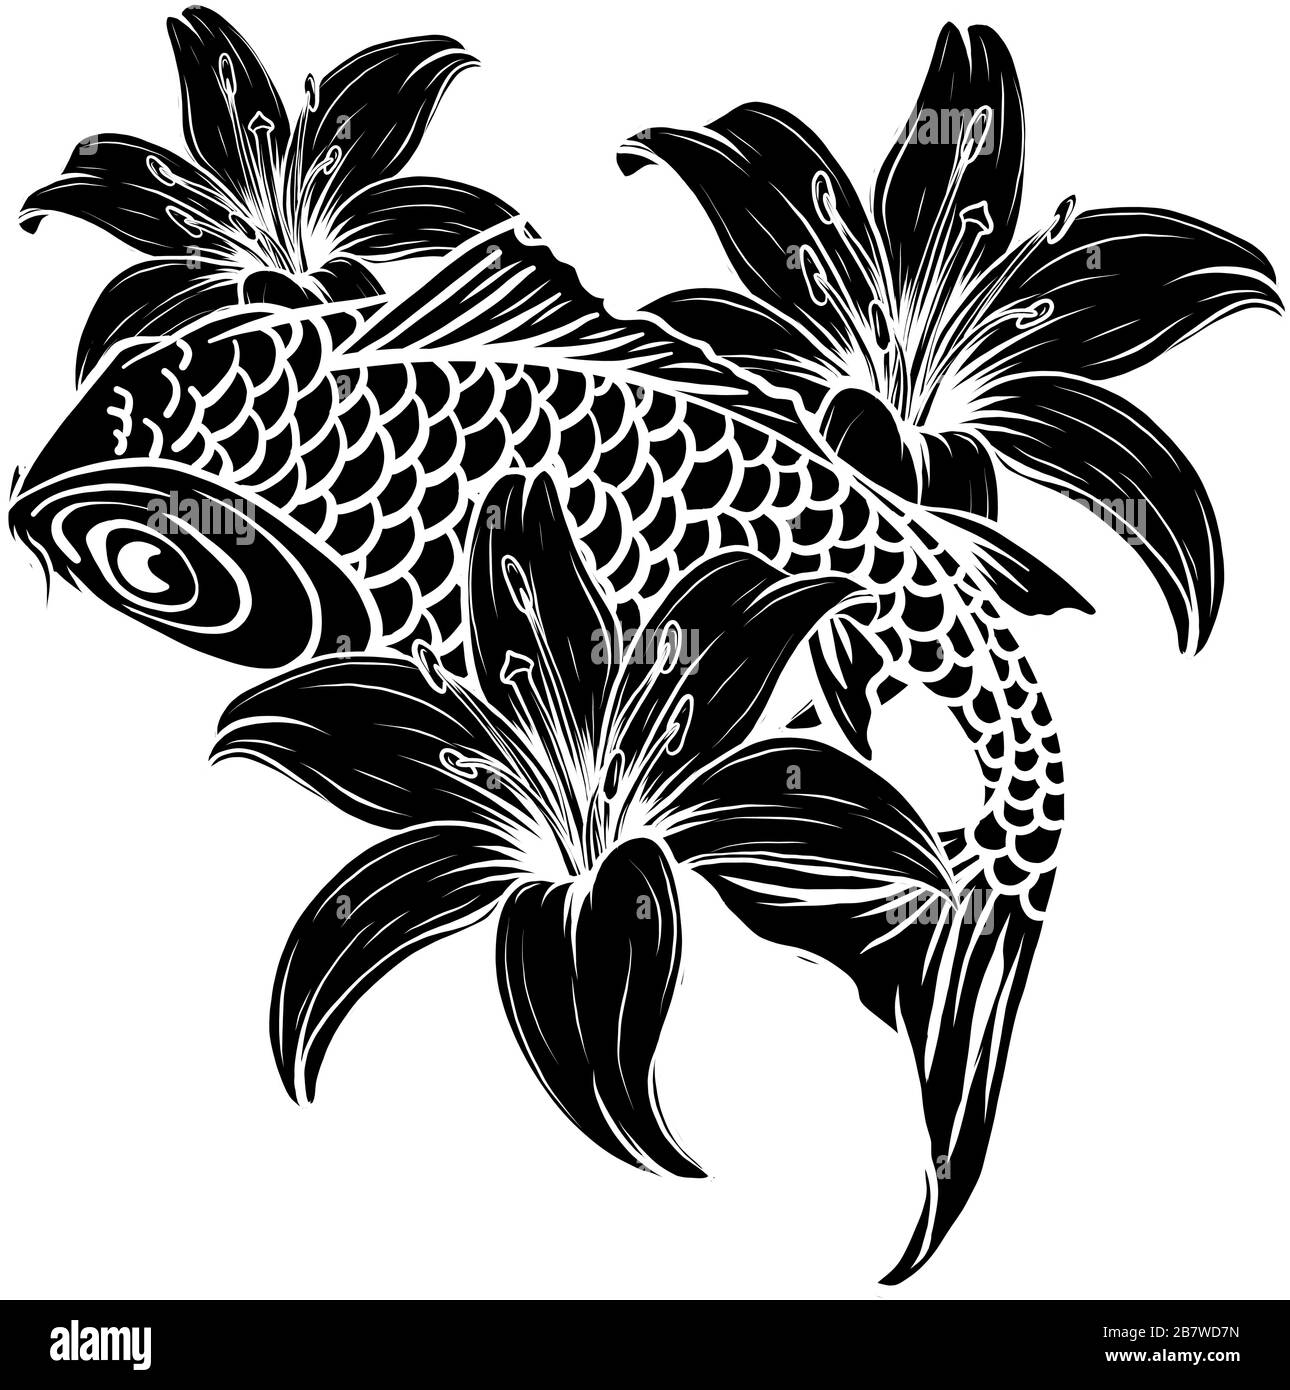 Giant carp fish vector illustration silhouette image Stock Vector